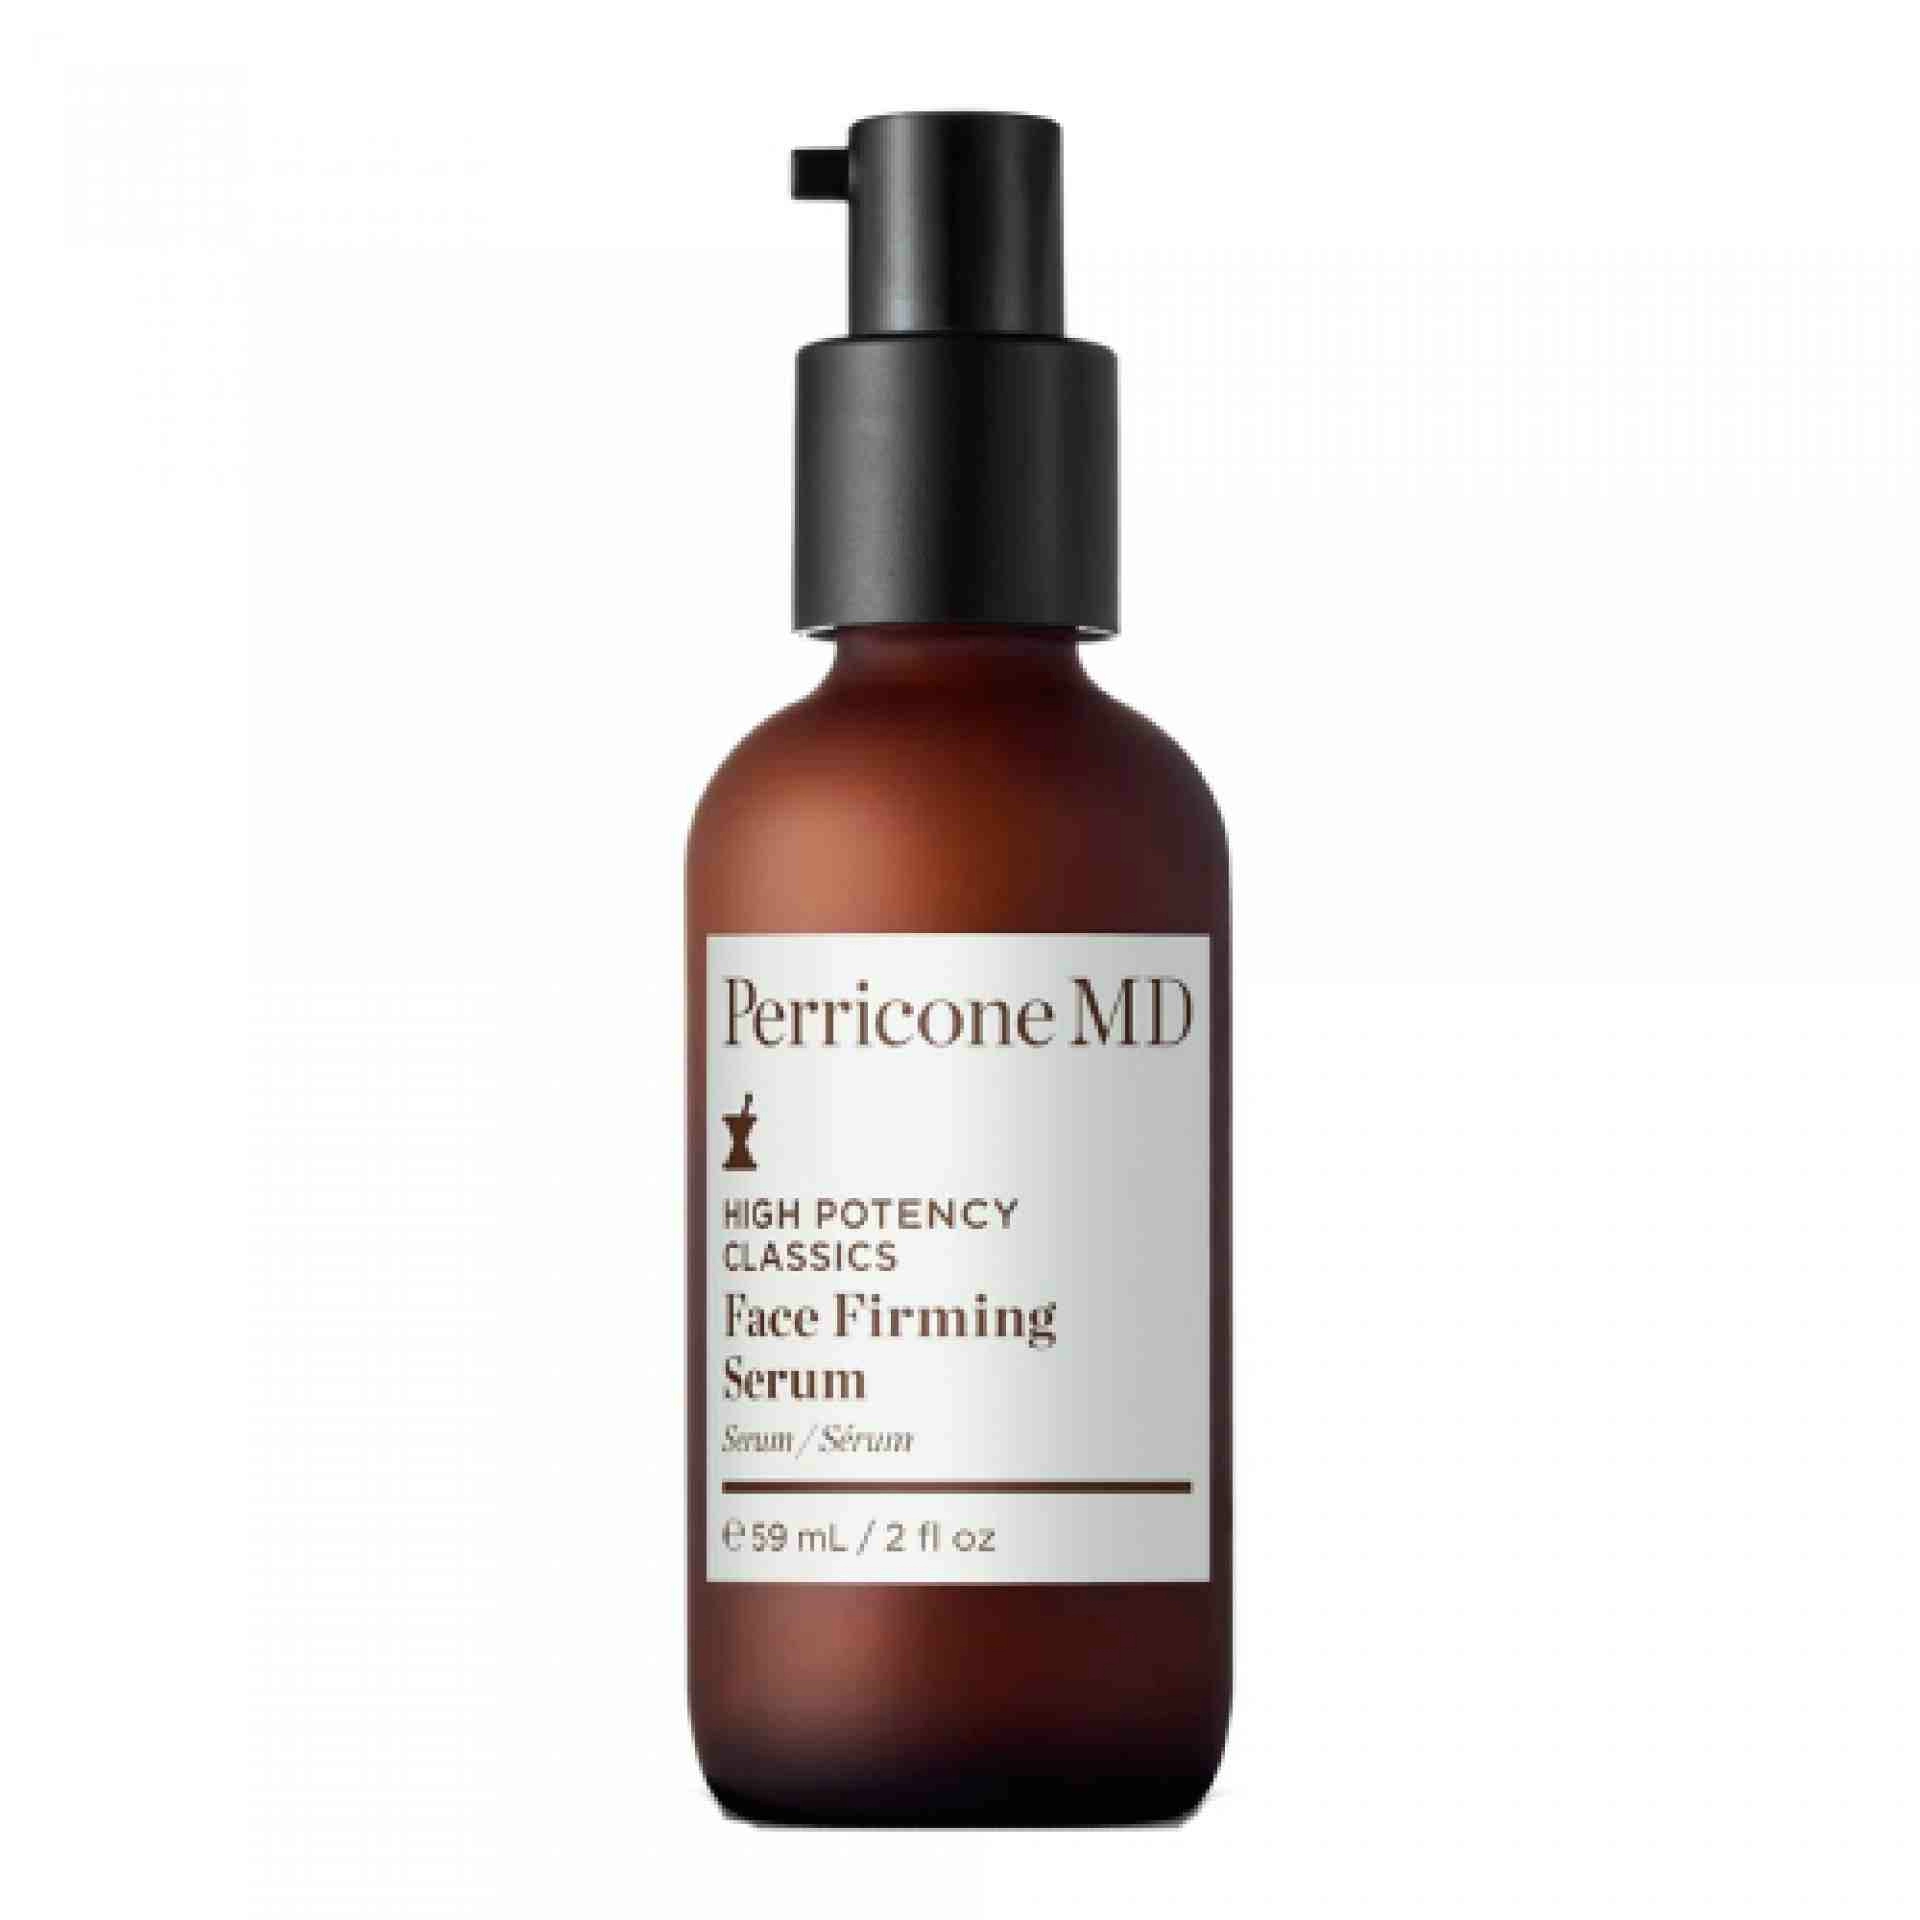 High Potency Classics Face Firming Serum | Serum facial 59 ml - High Potency Classics - Perricone MD ®